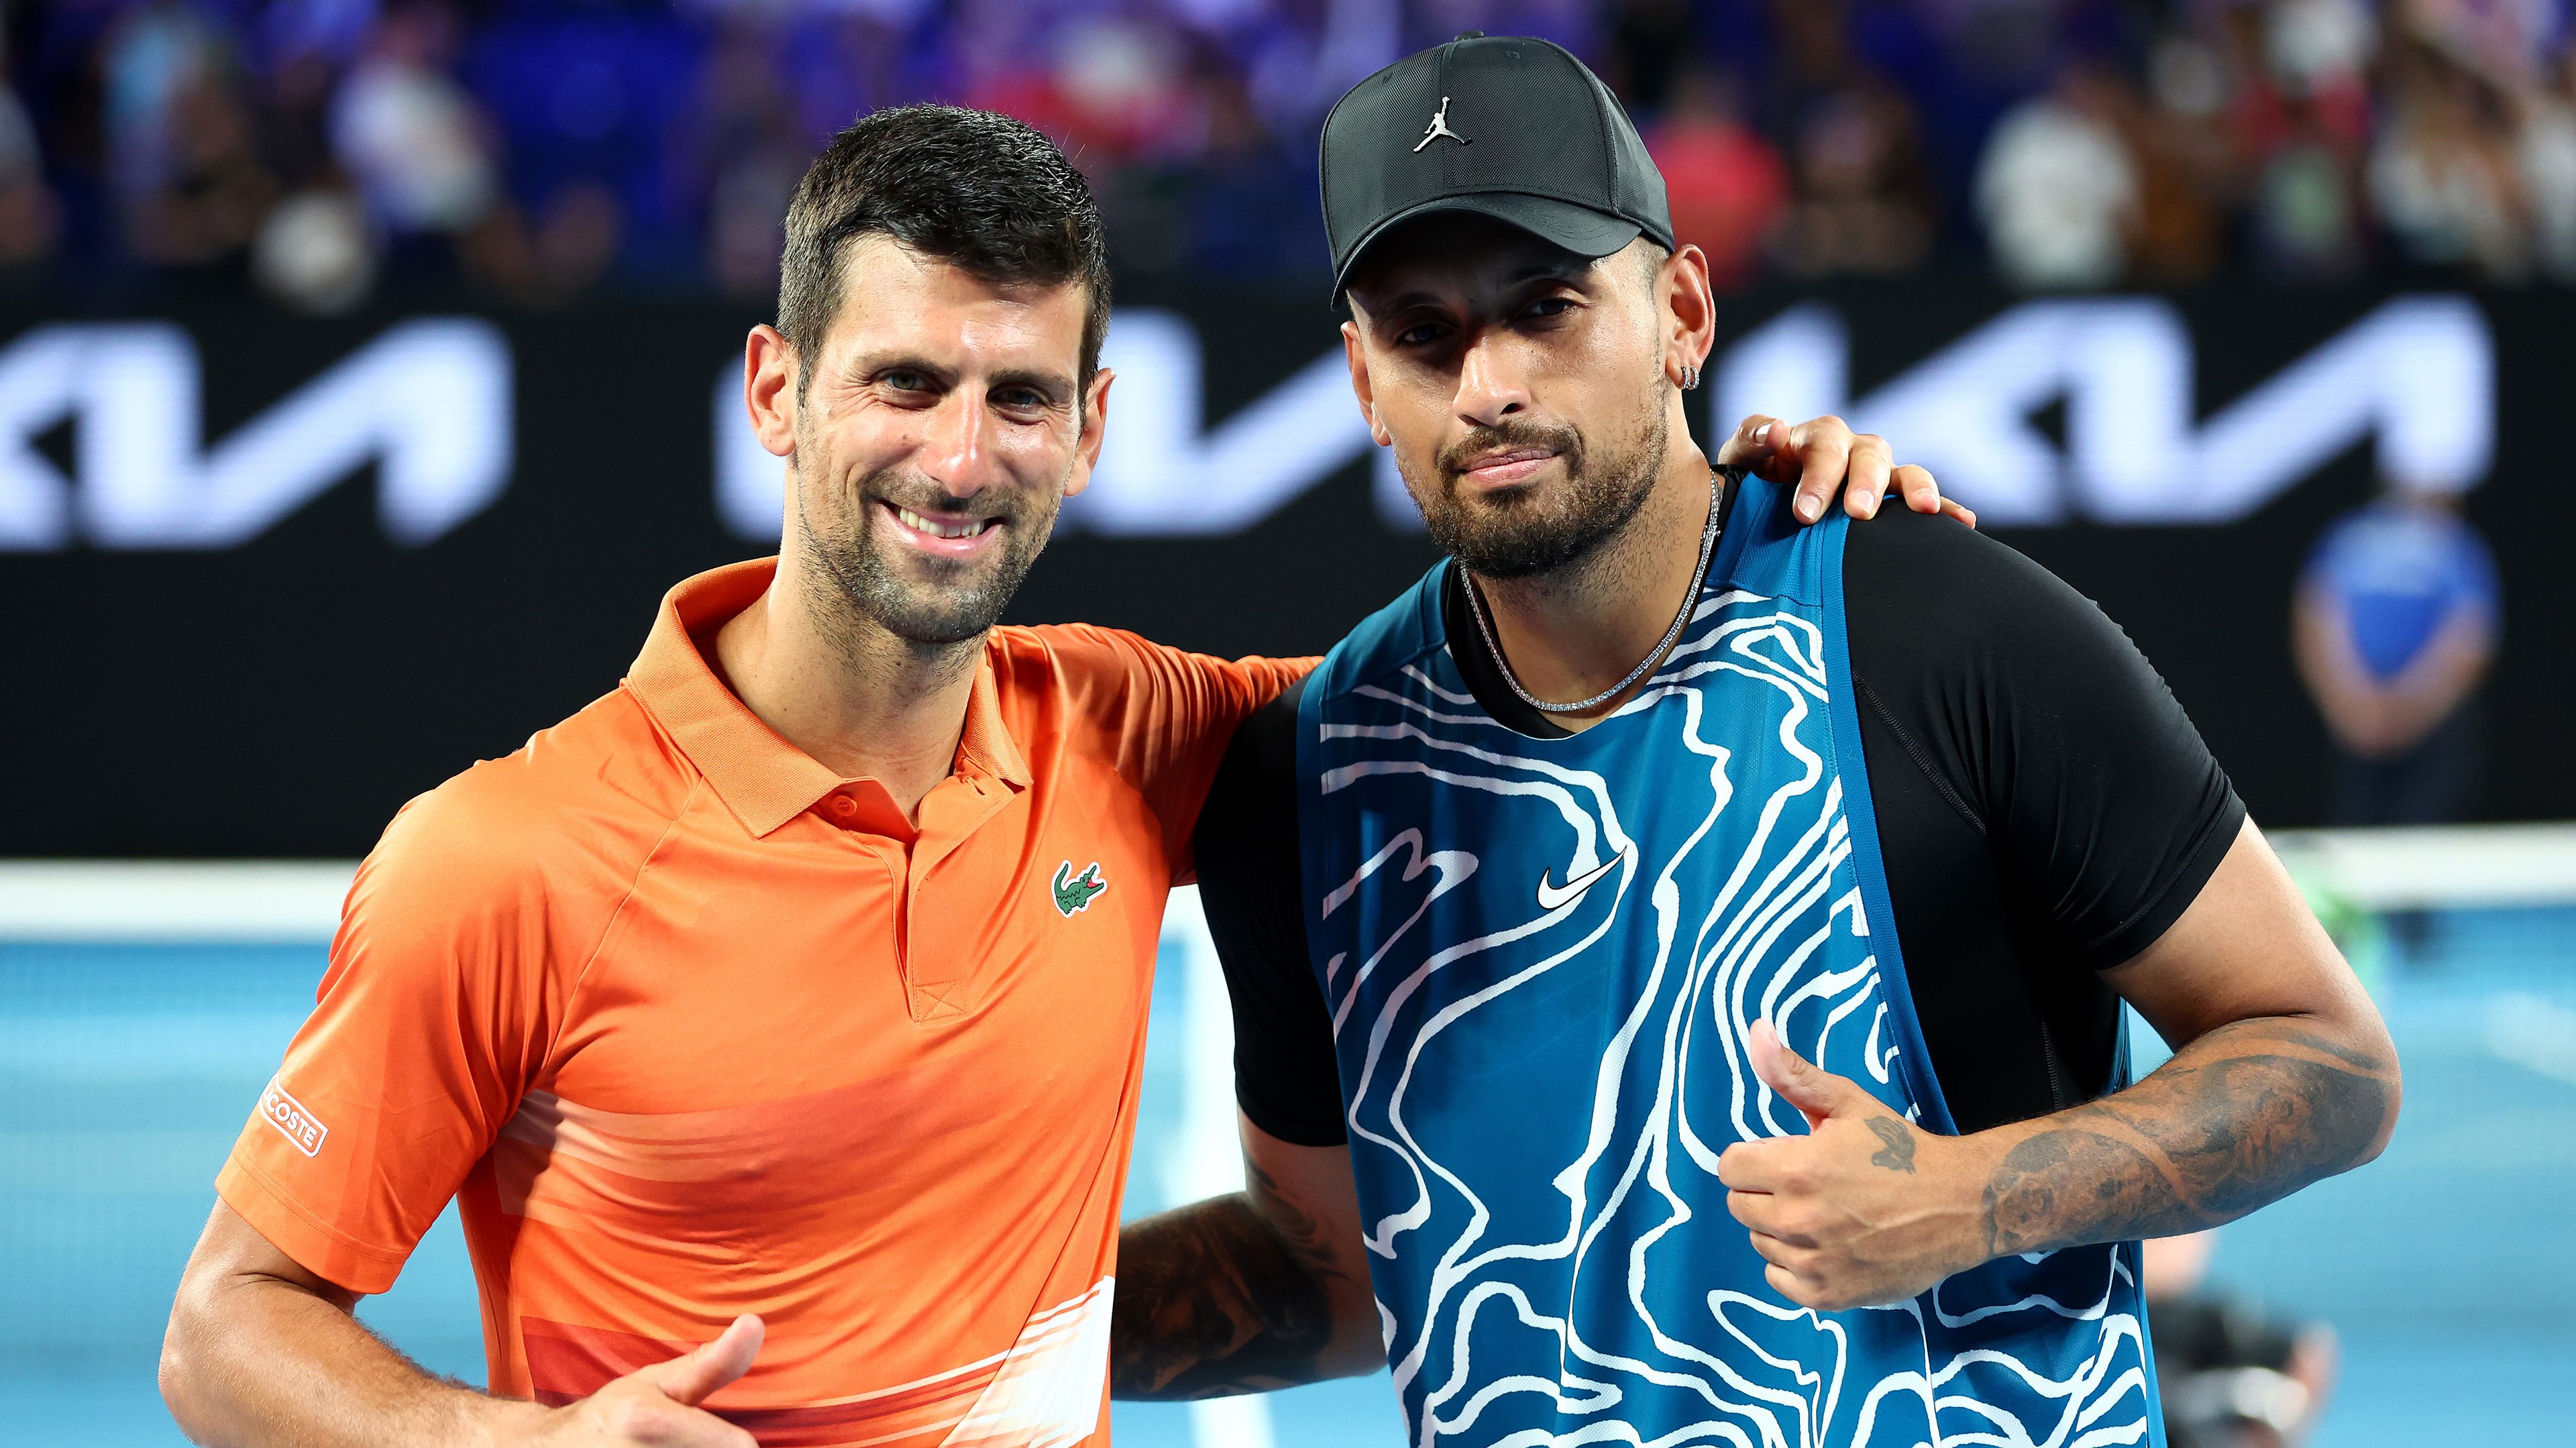 Novak Djokovic and Nick Kyrgios pose for a photo following their Arena Showdown charity match.